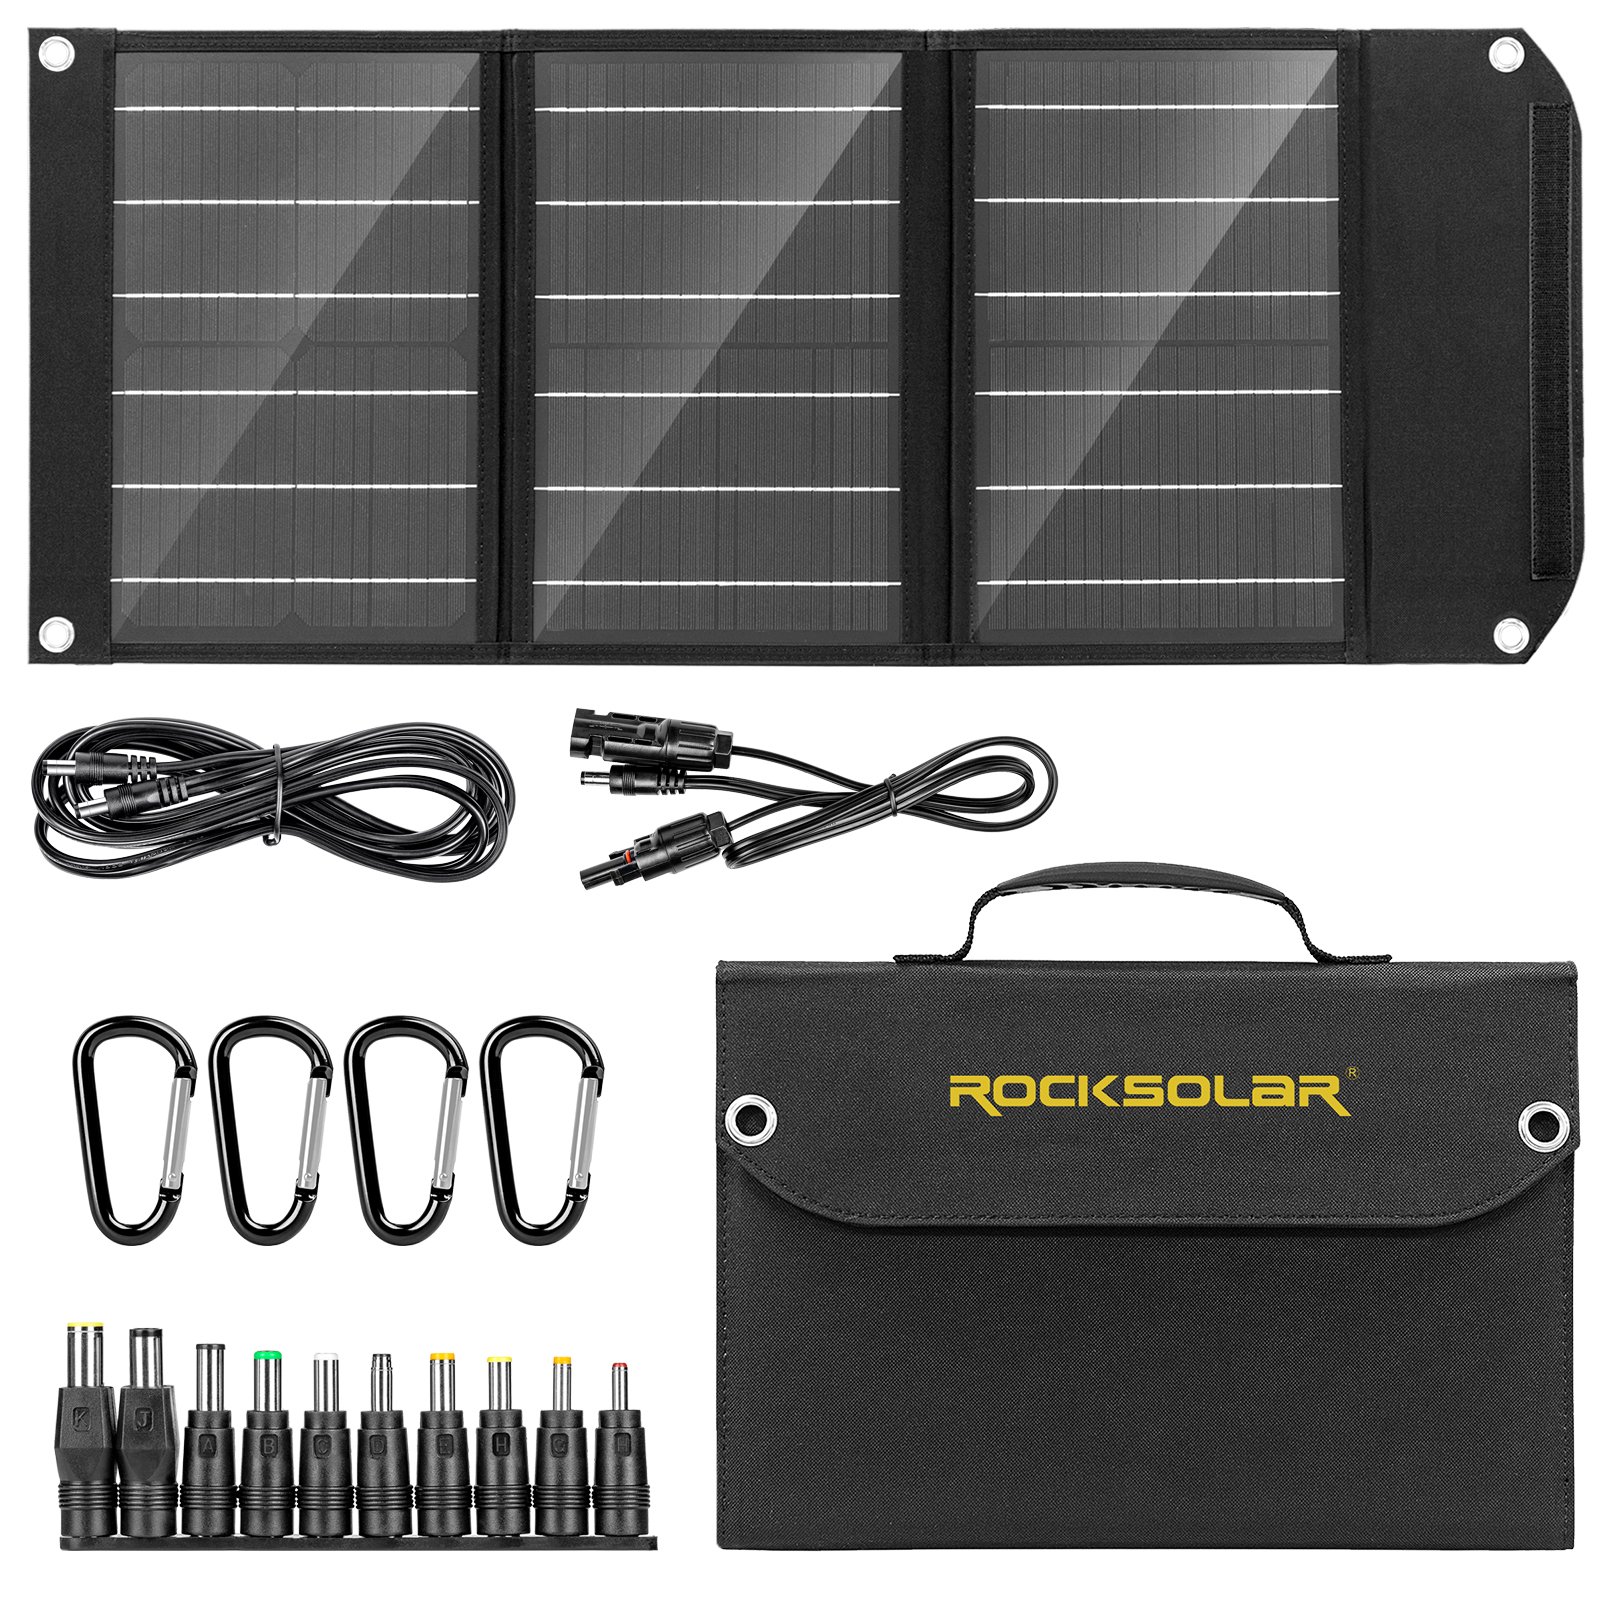 ROCKSOLAR-30W-12-Foldable-Solar-Panel-Portable-USB-Solar-Battery-Charger_1024x1024@2x-bbbb6655